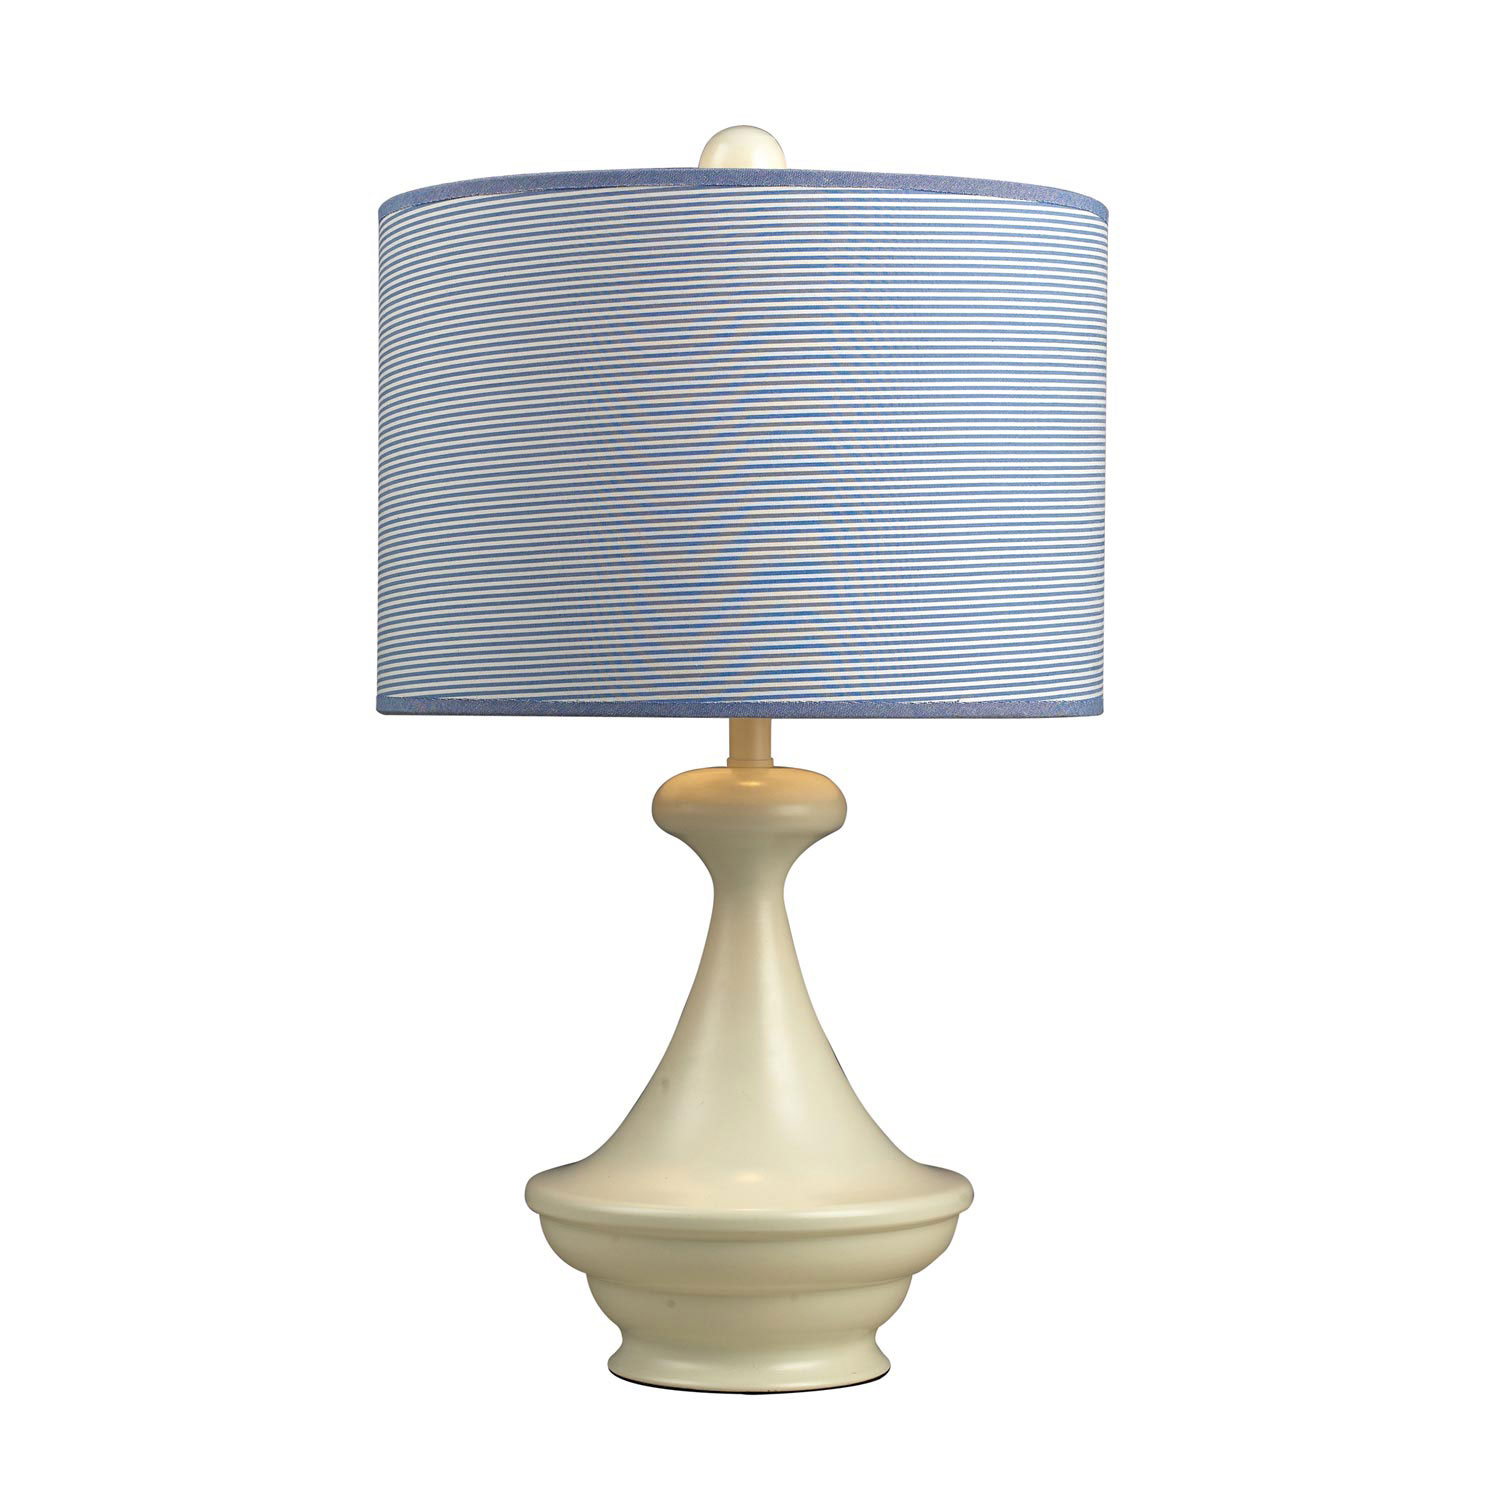 Elk Lighting 111-1090 Edgewood Shore Table Lamp - Antique White